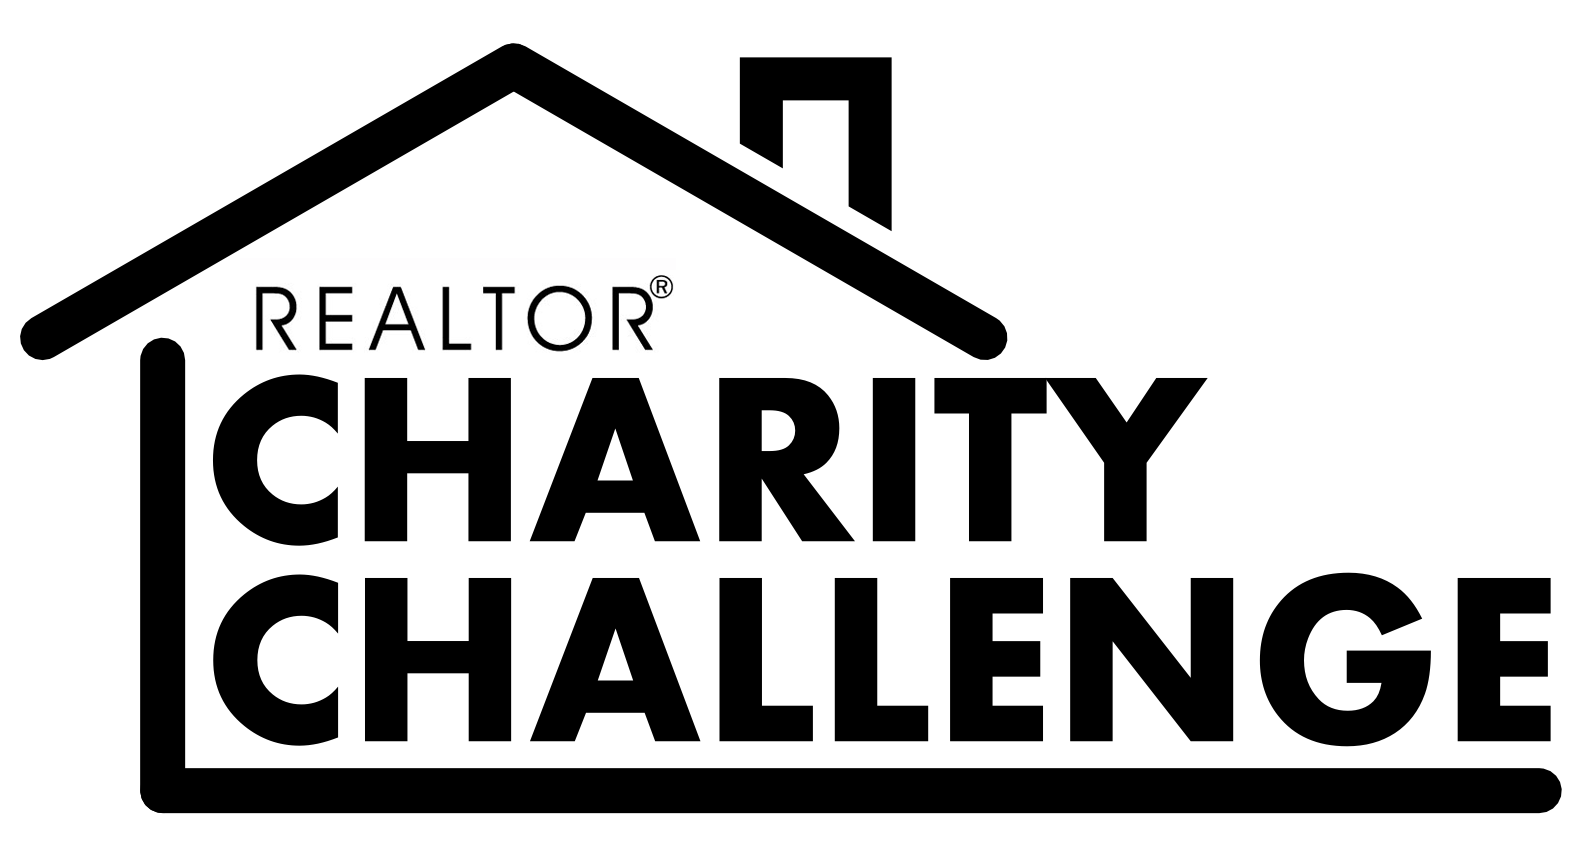 Charity Challenge Realtor